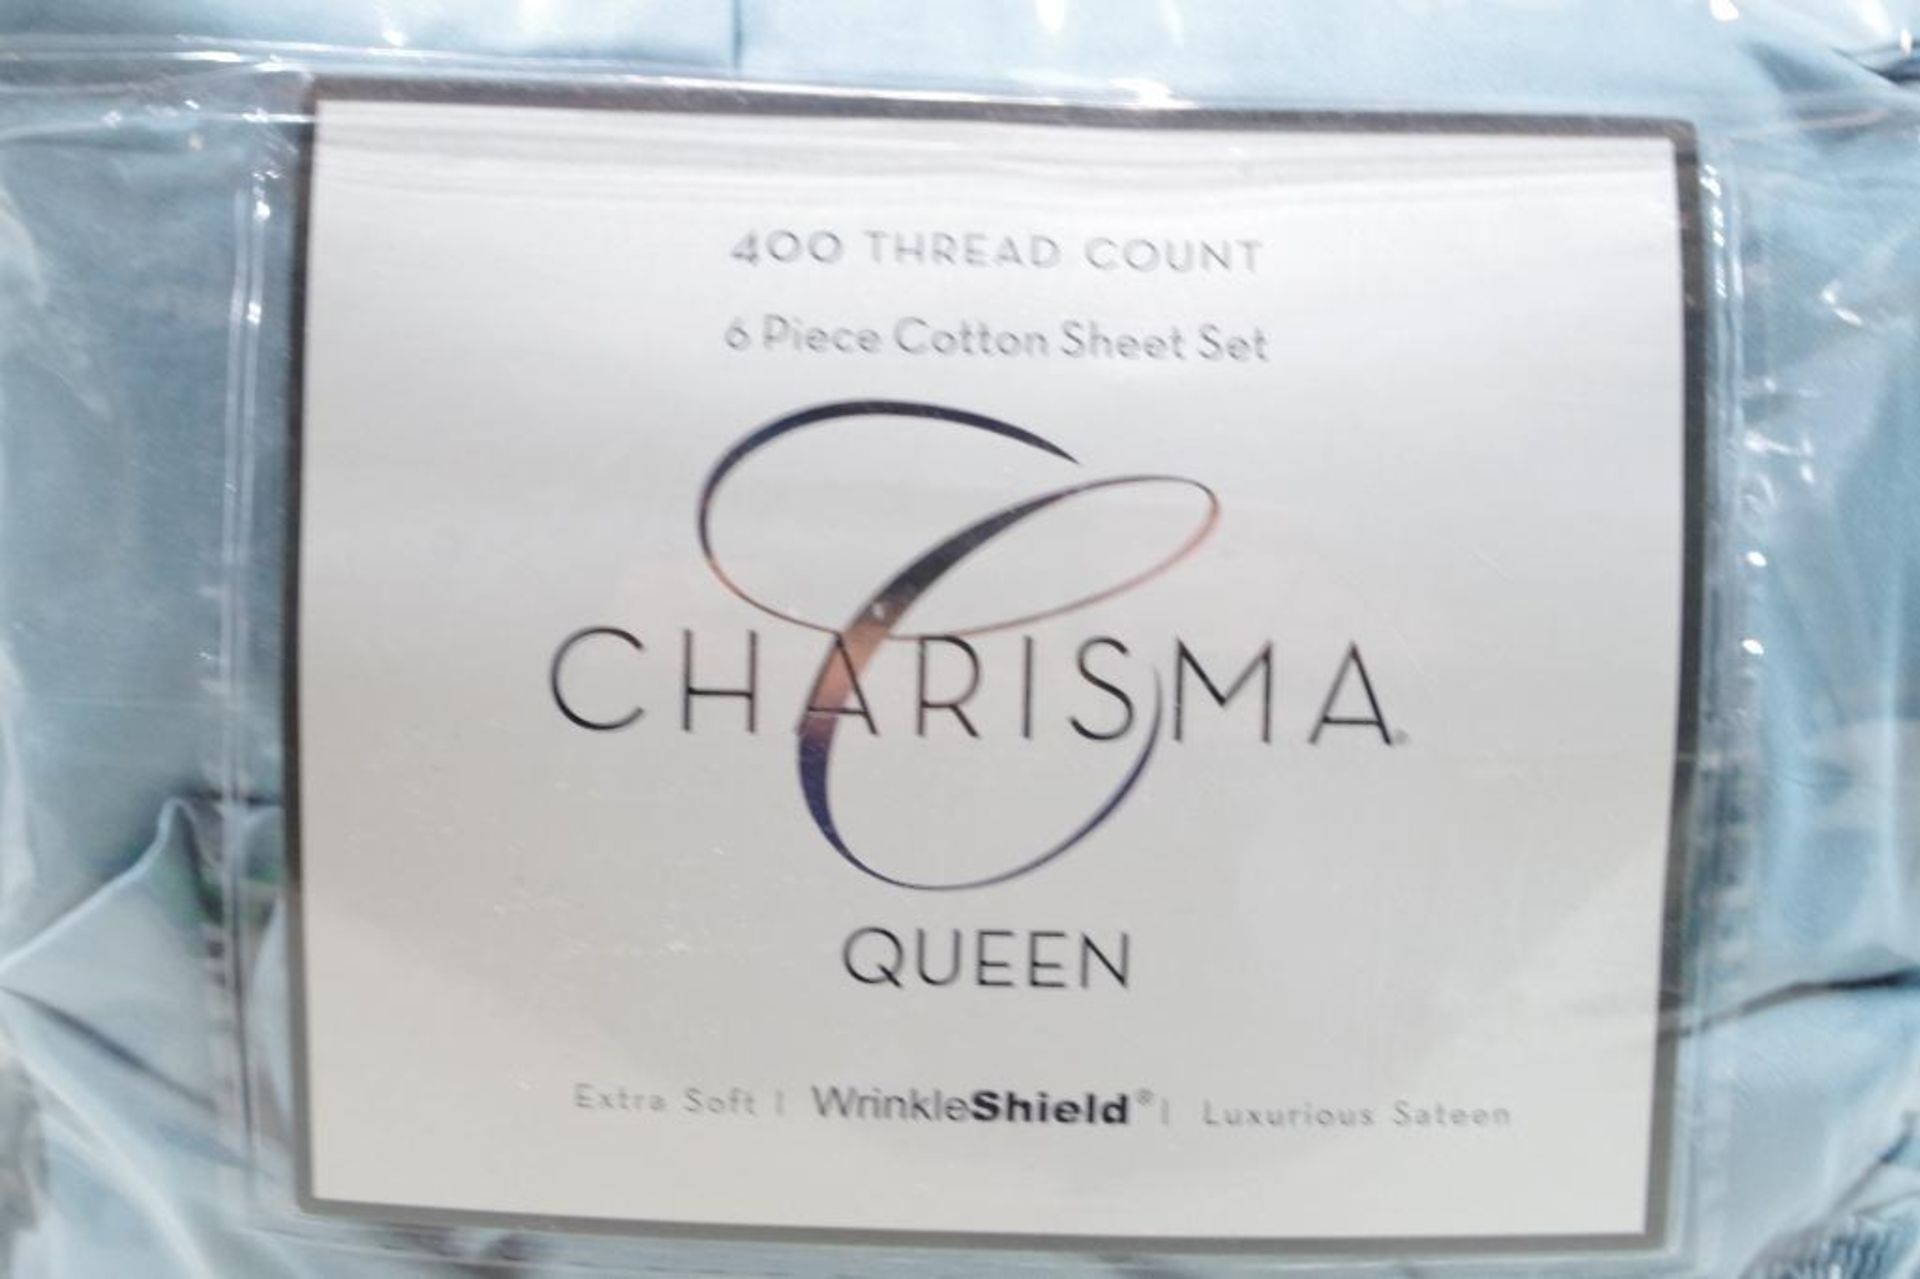 CHARISMA Queen 6-Piece Cotton Sheet Set, Store Return - Image 2 of 4